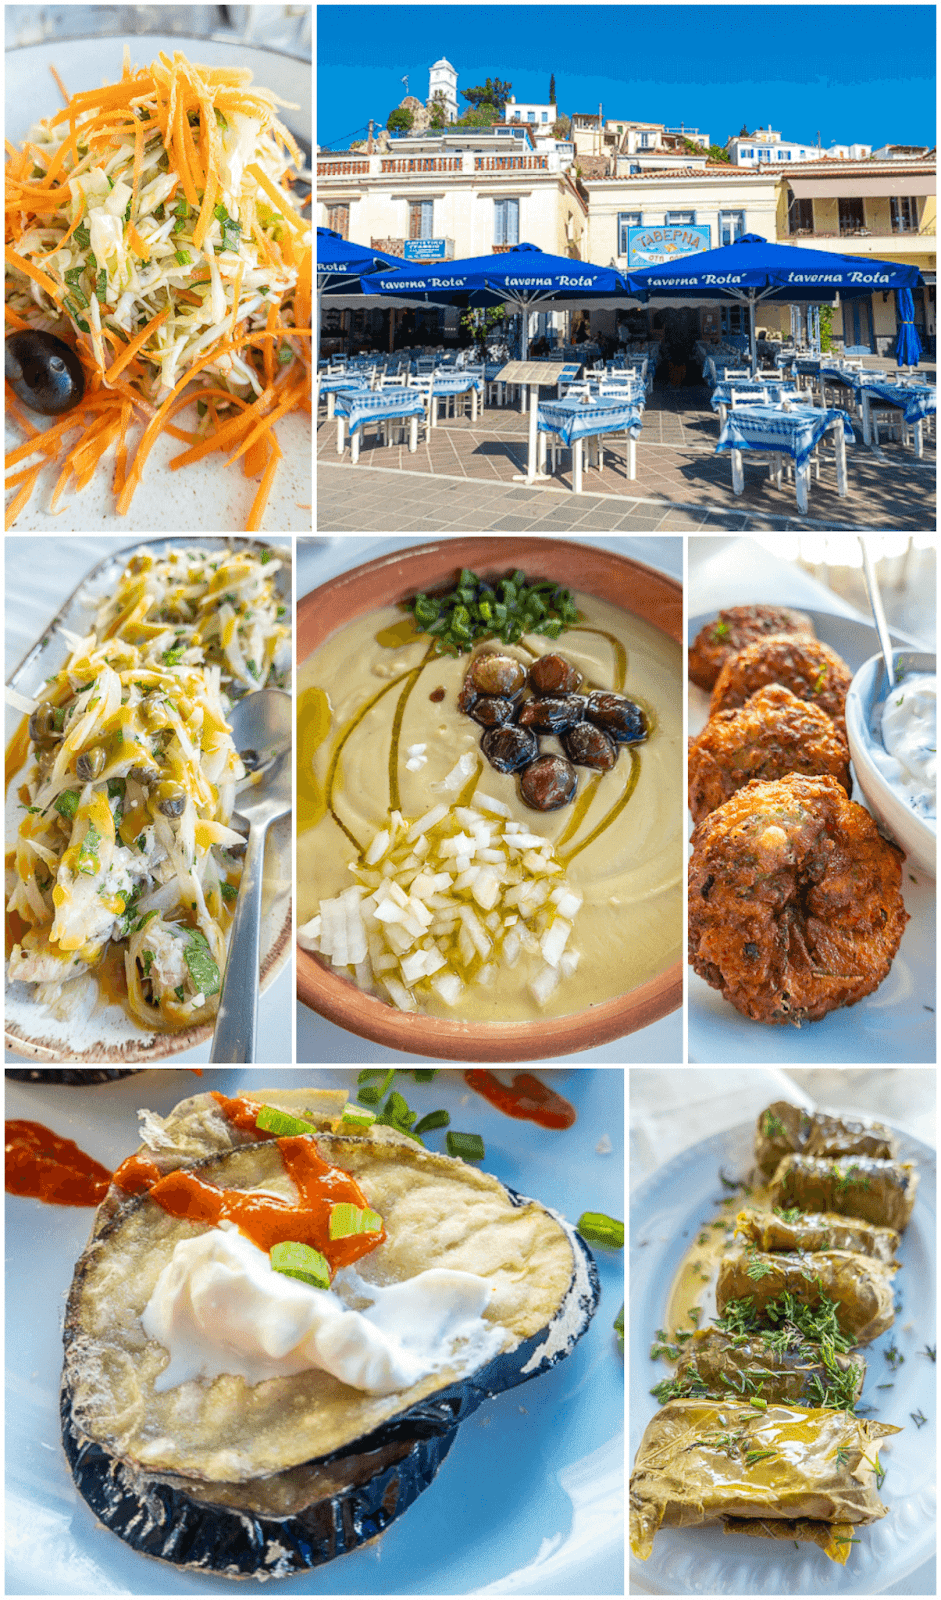 Lunch at Taverna Rota in Poros Greece